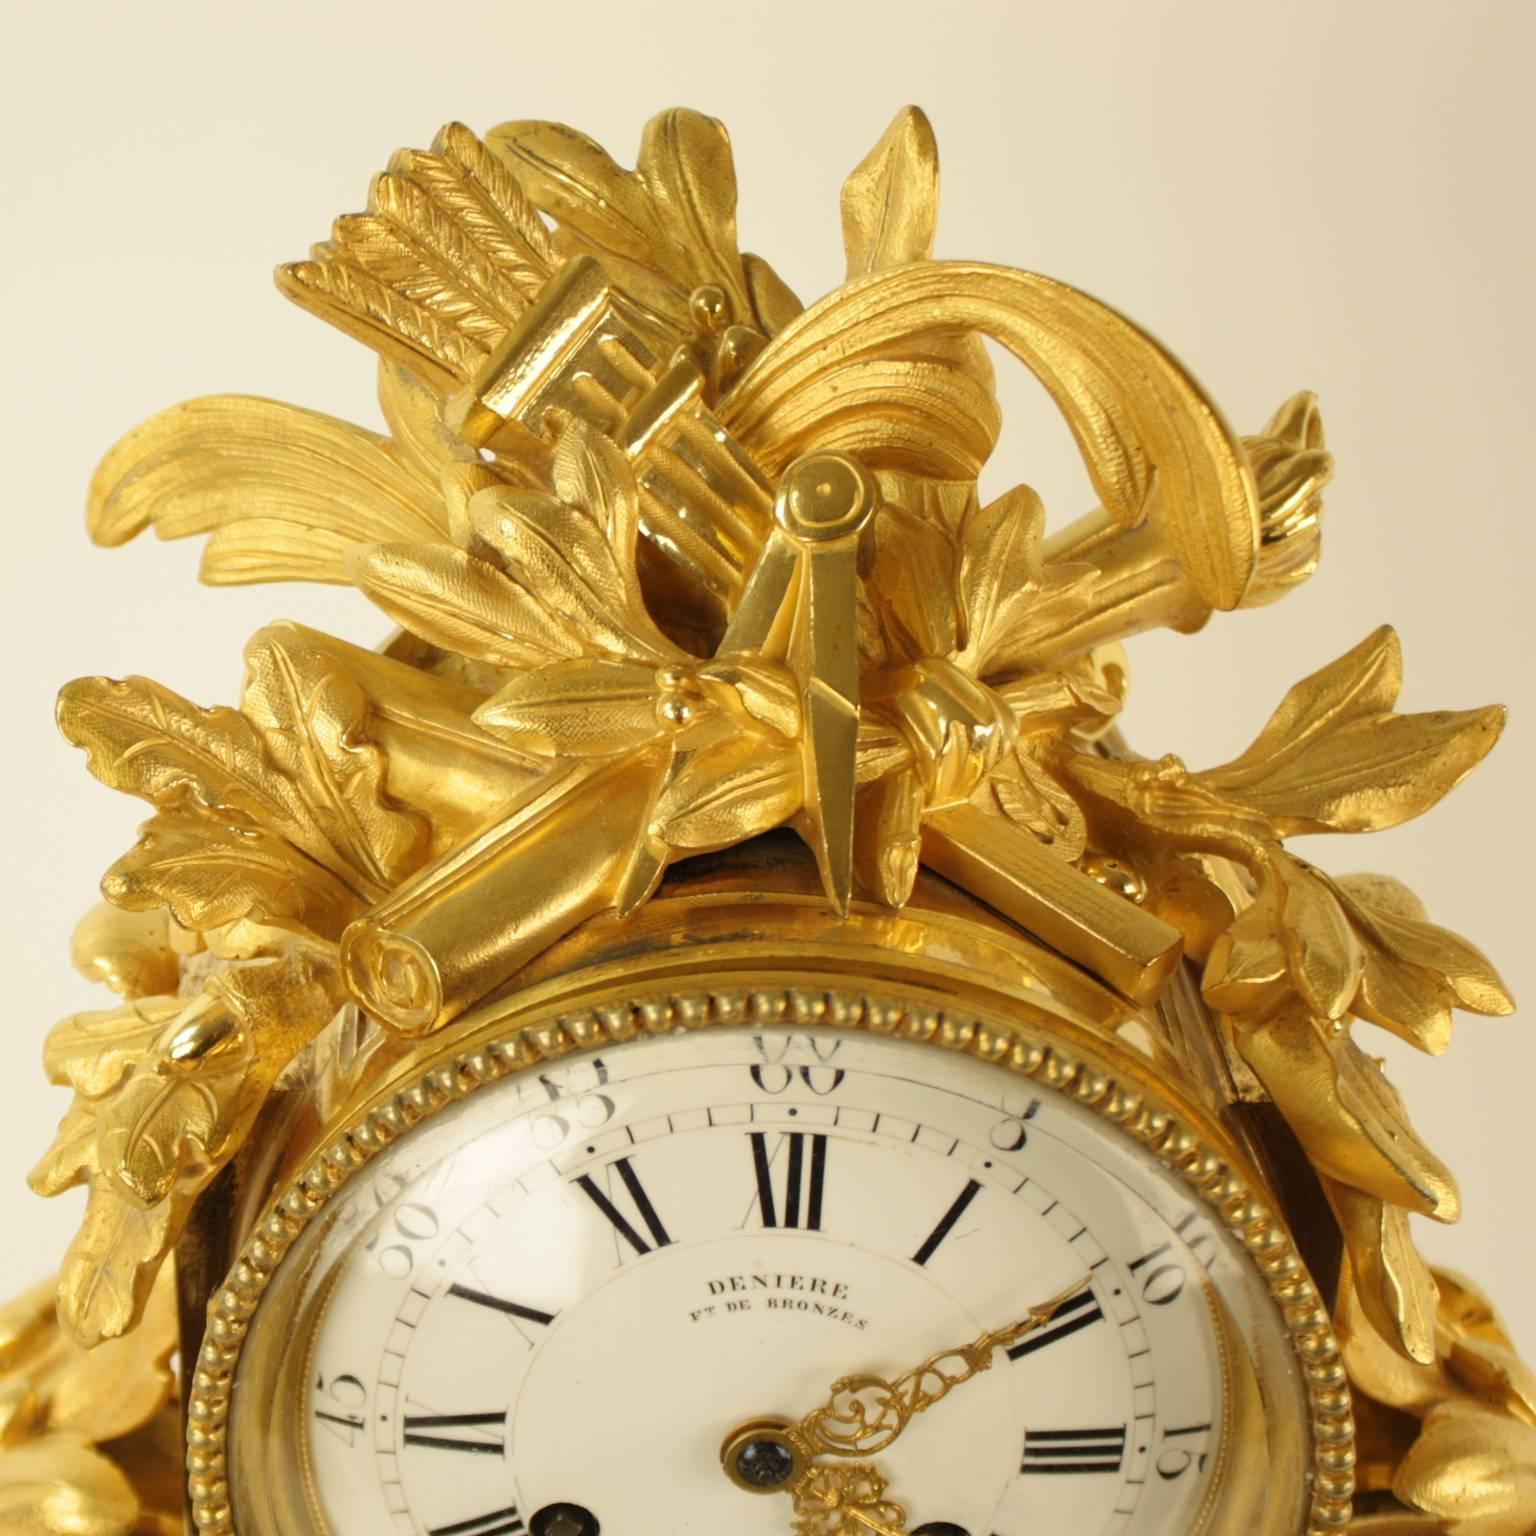 French Large Louis XVI Style Ormolu Mantel Clock by J.F. Deniere (1774-1866)